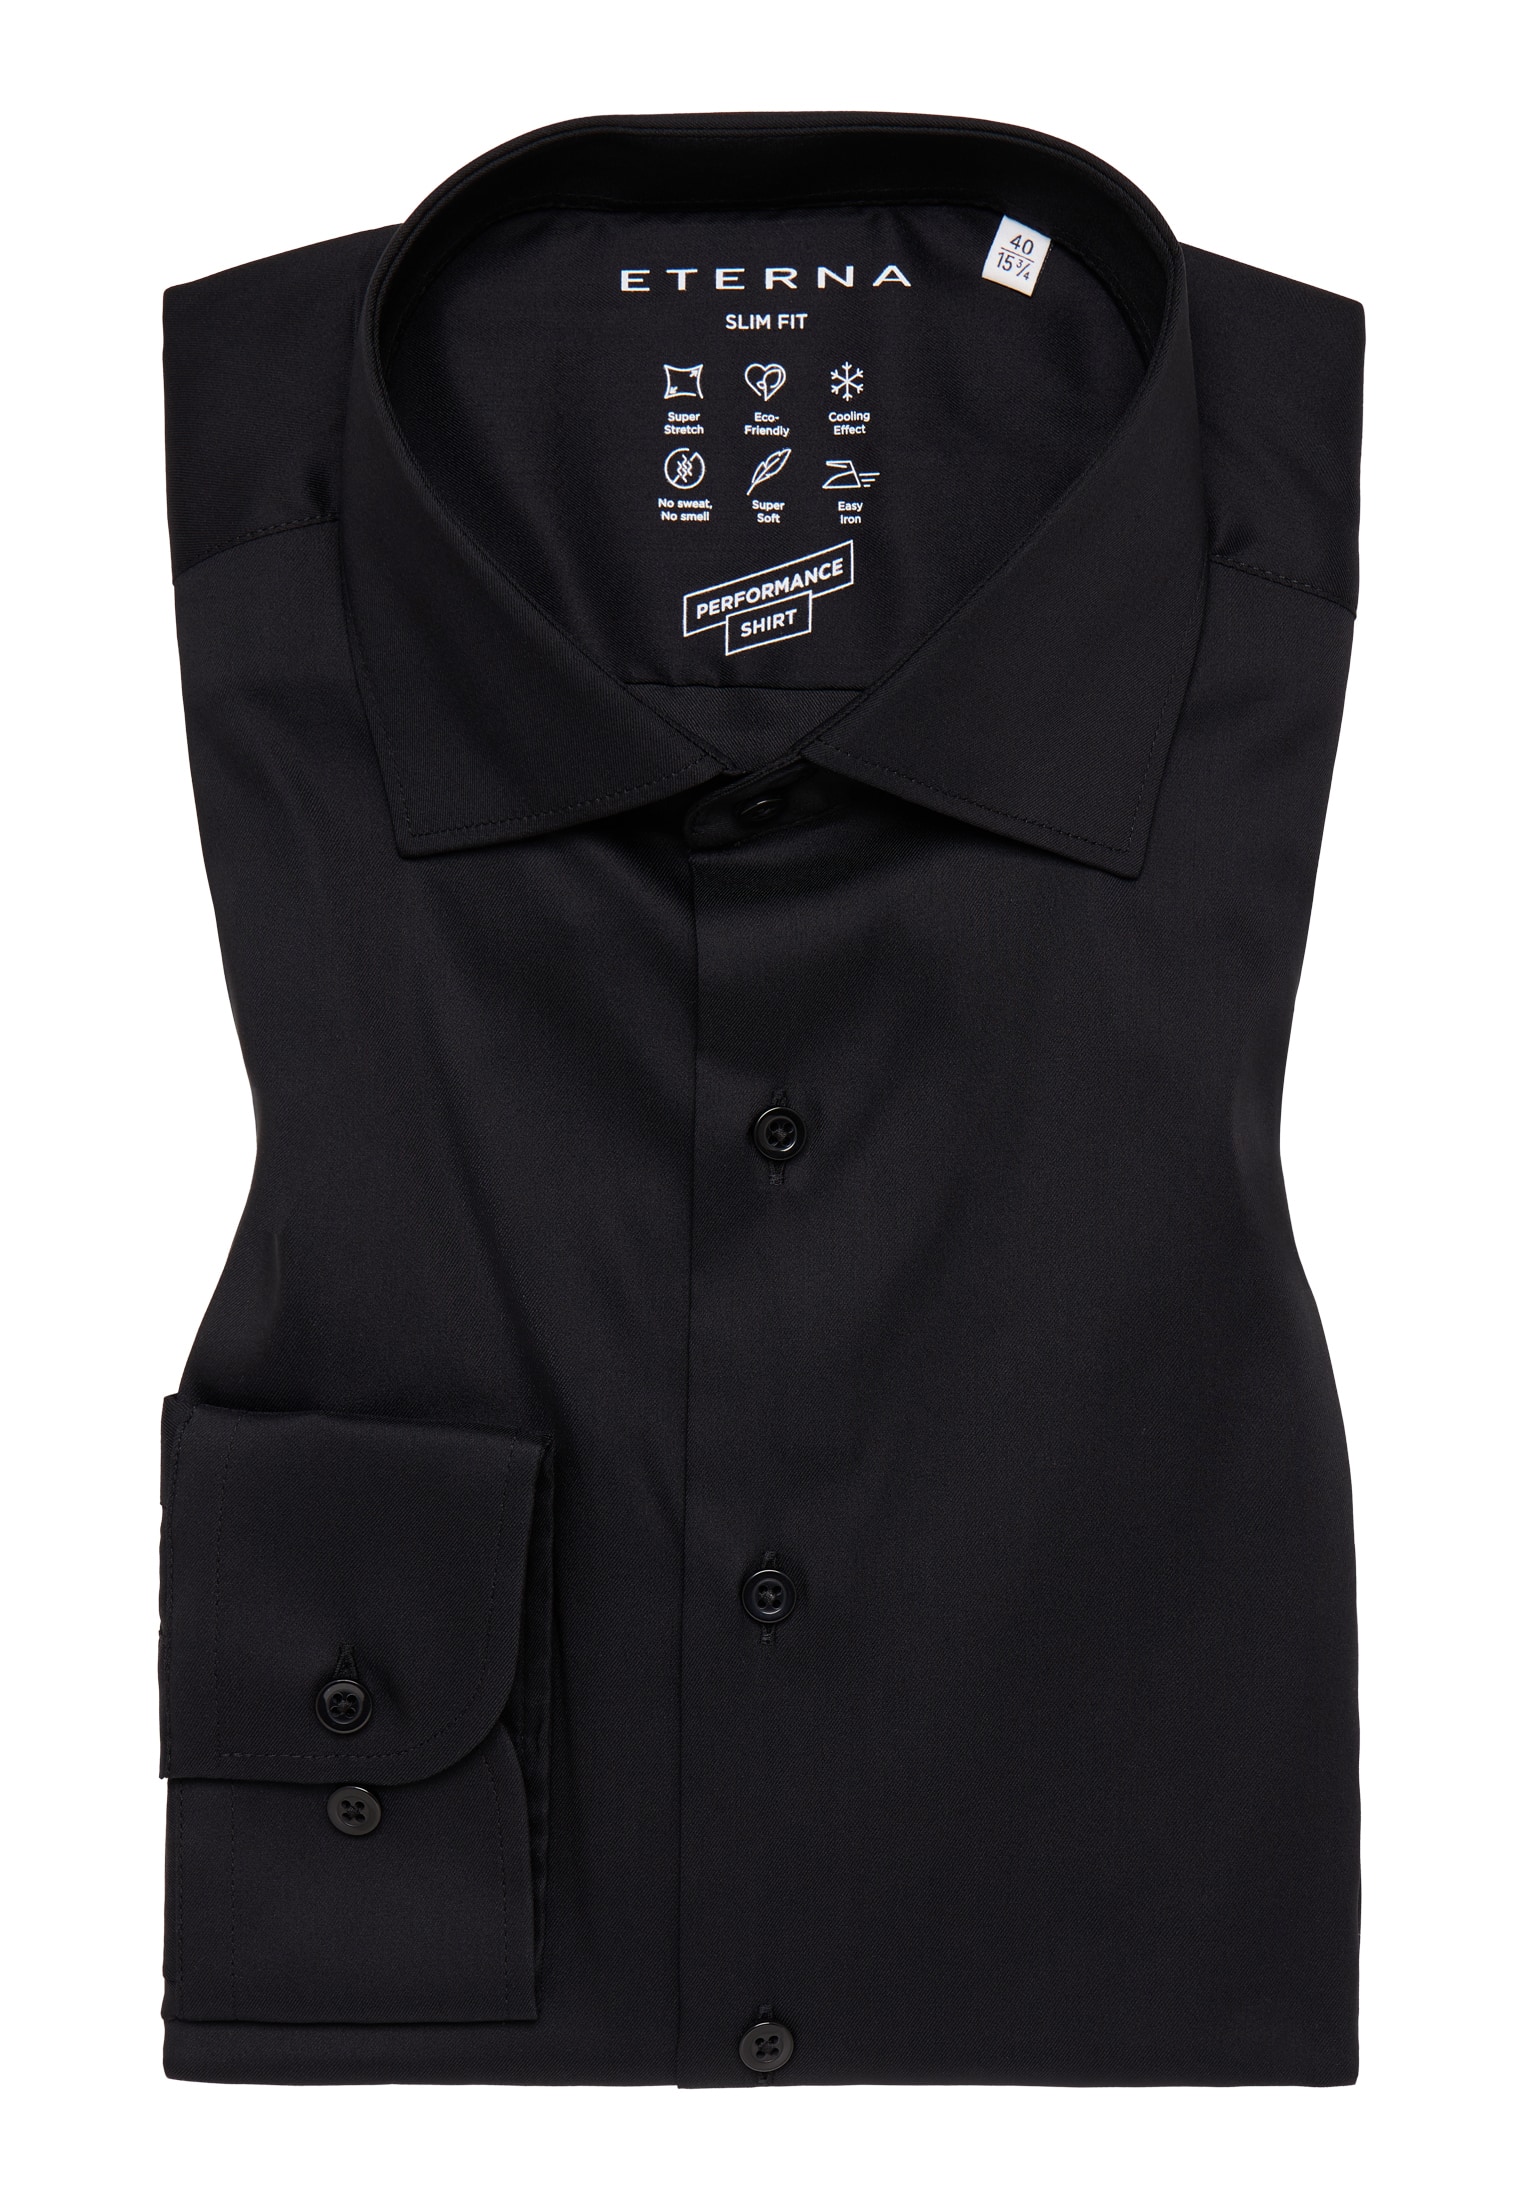 SLIM FIT Performance Shirt in black 38 | black 1SH02217-03-91-38-1/1 sleeve | | long | plain